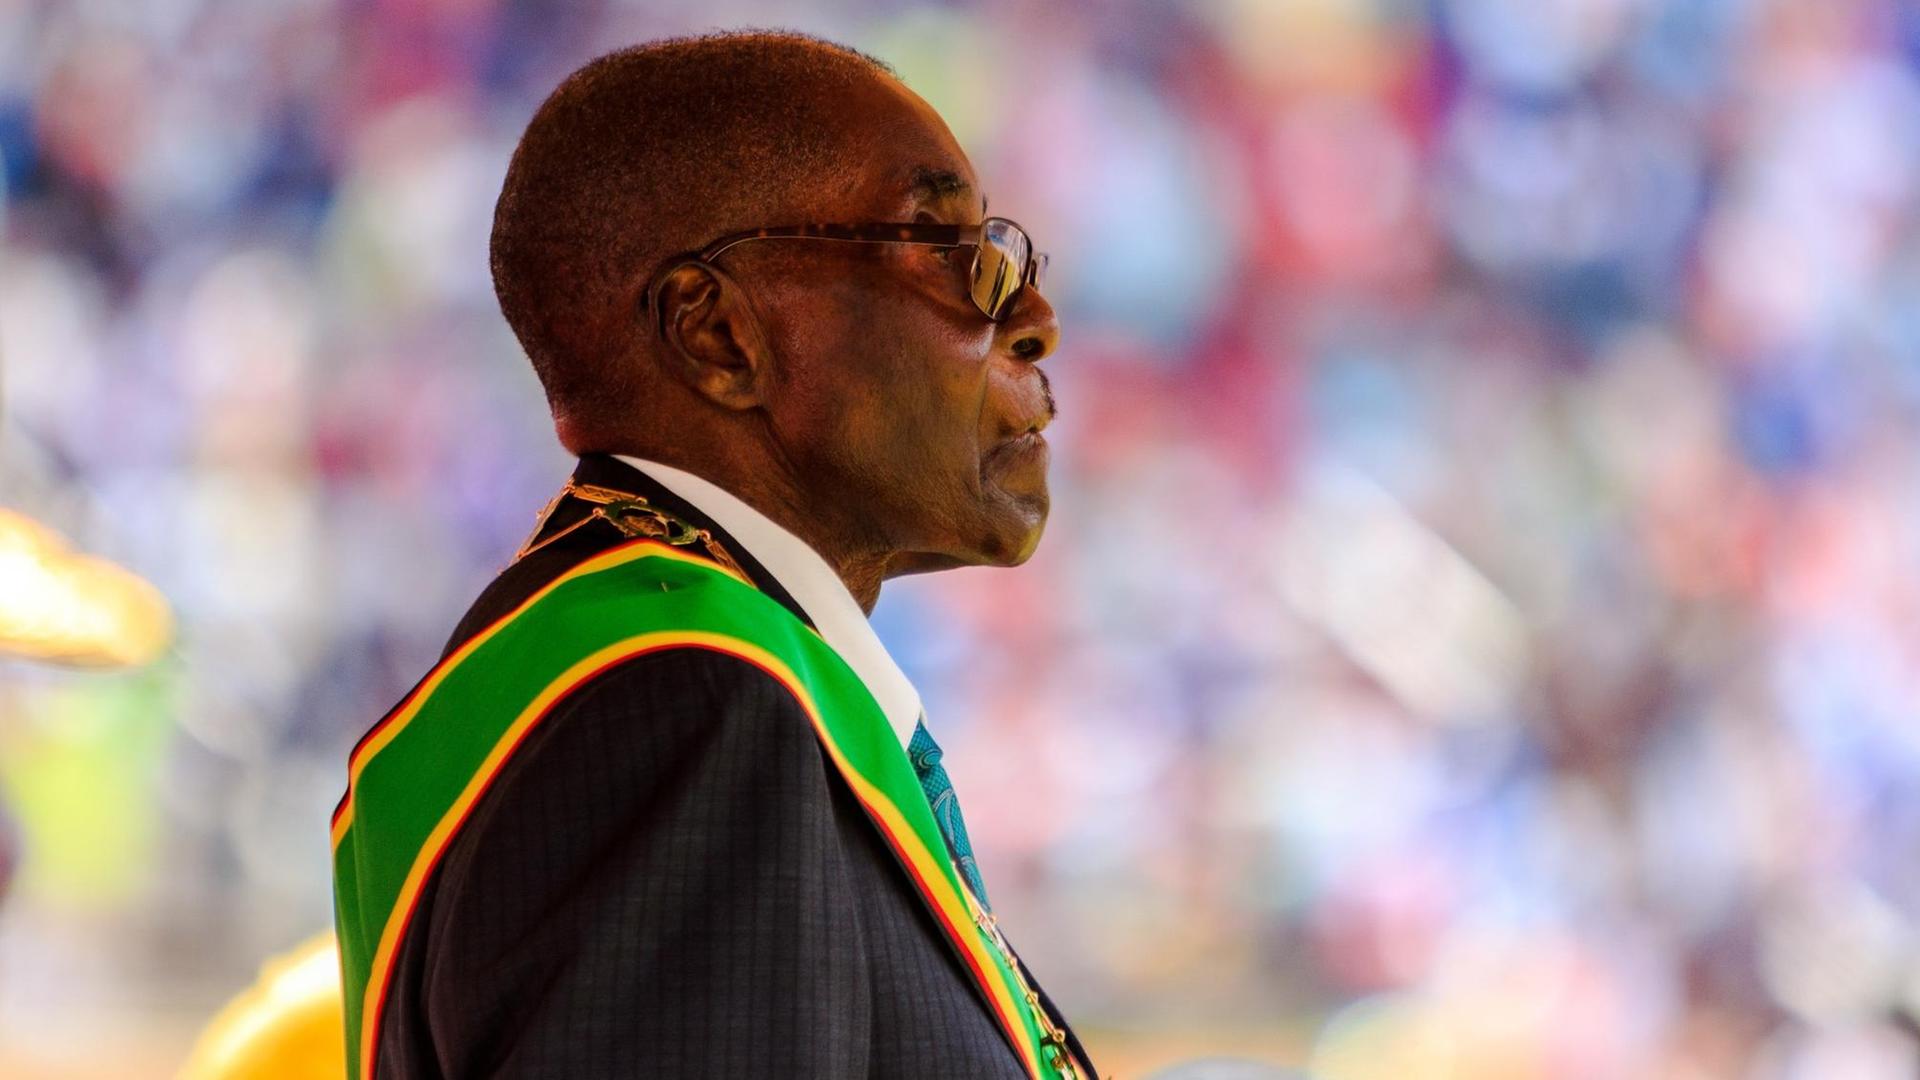 Robert Mugabe im Profil